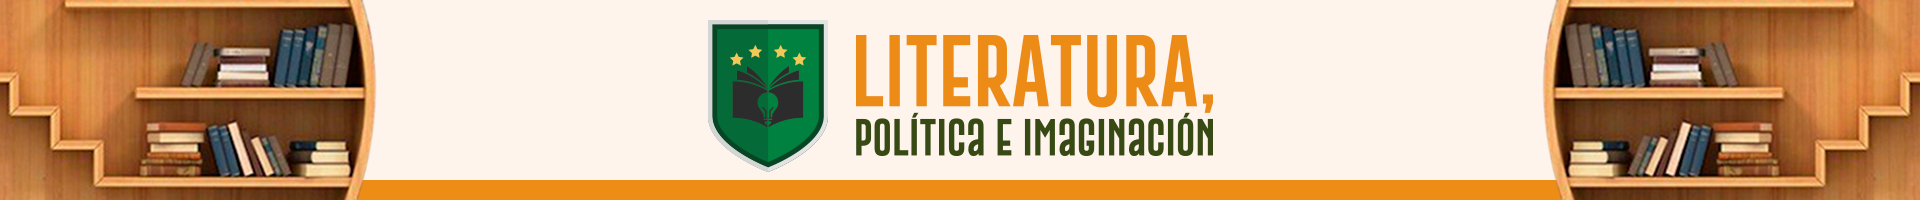 asset-v1_Literatura+Literatura_Politica_Imaginacion+2022+type@asset+block@1920x200_LITERATURA